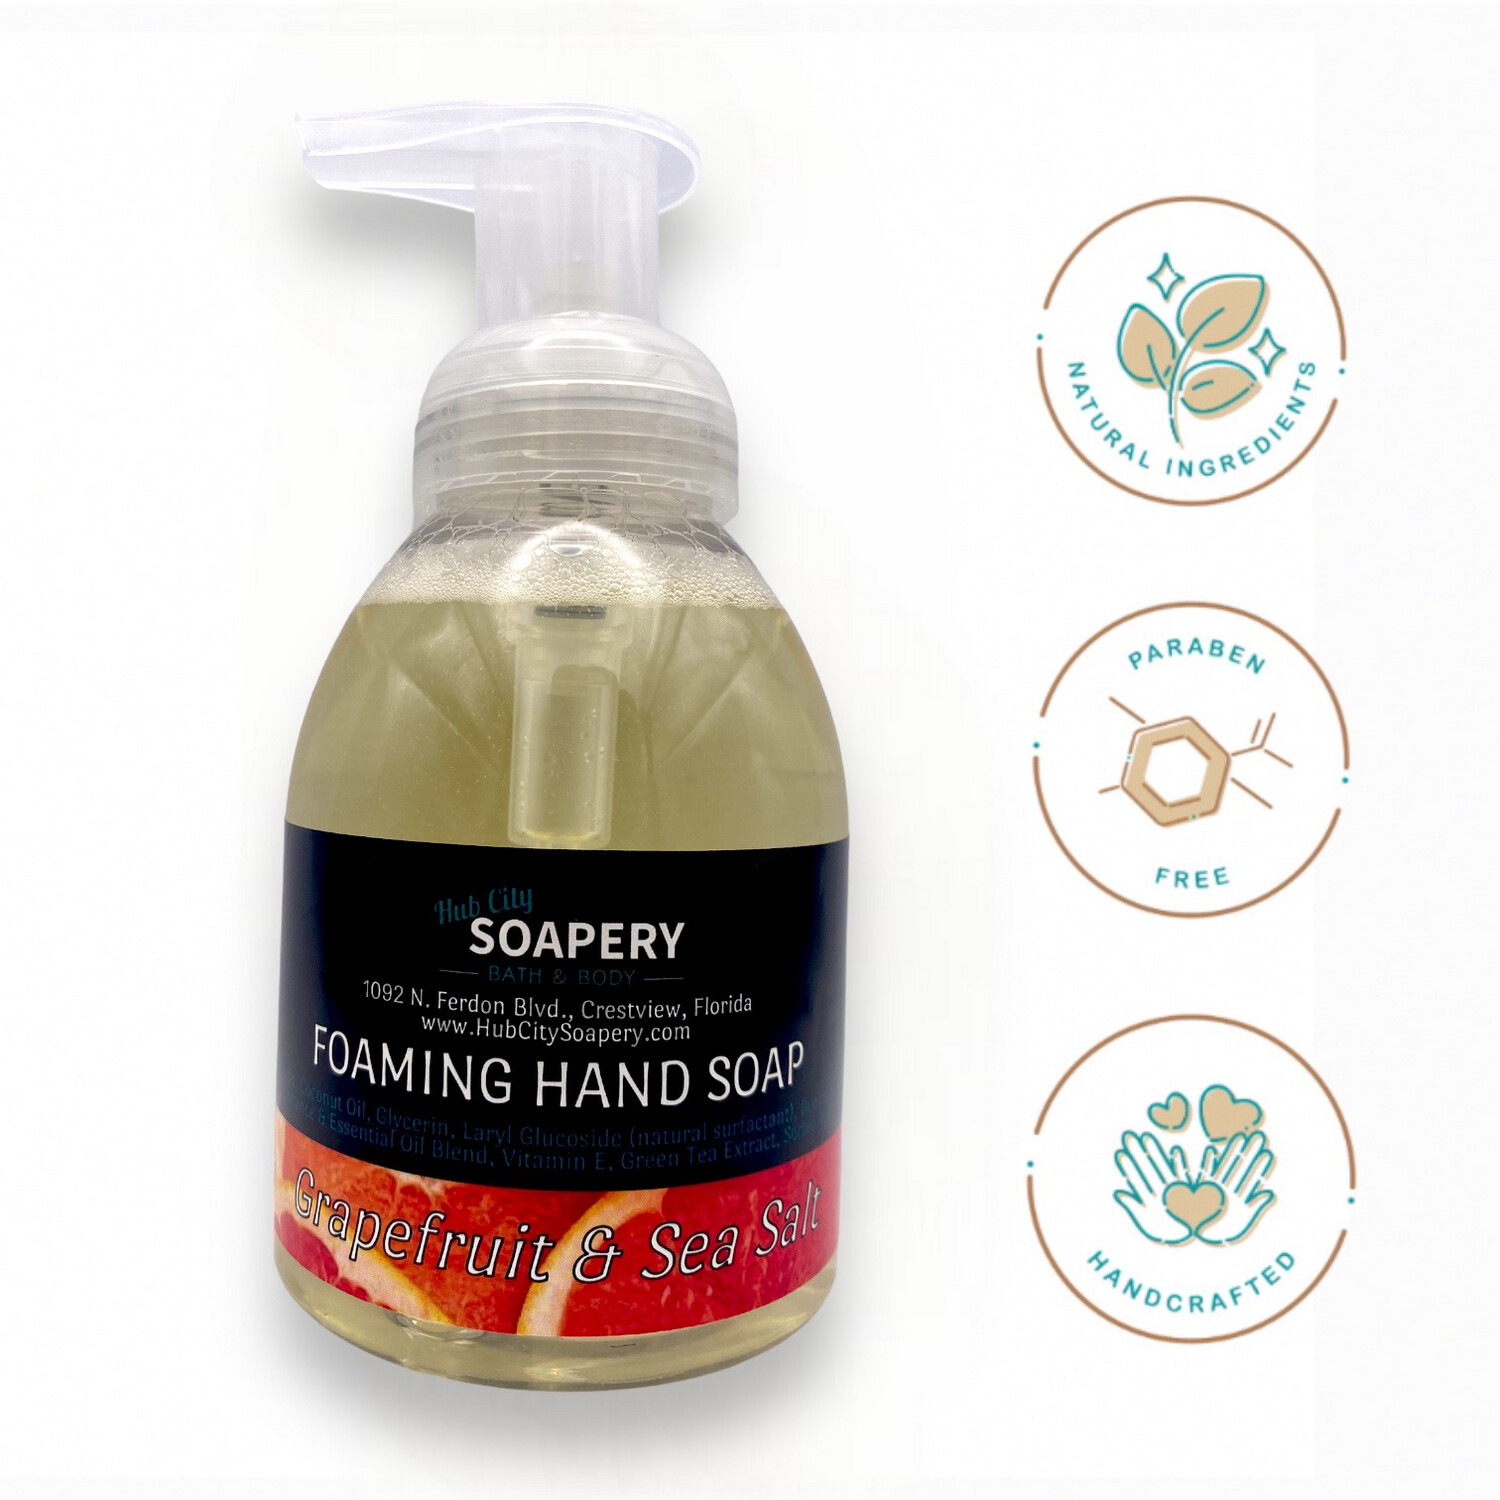 Grapefruit & Sea Salt Foaming Hand Soap